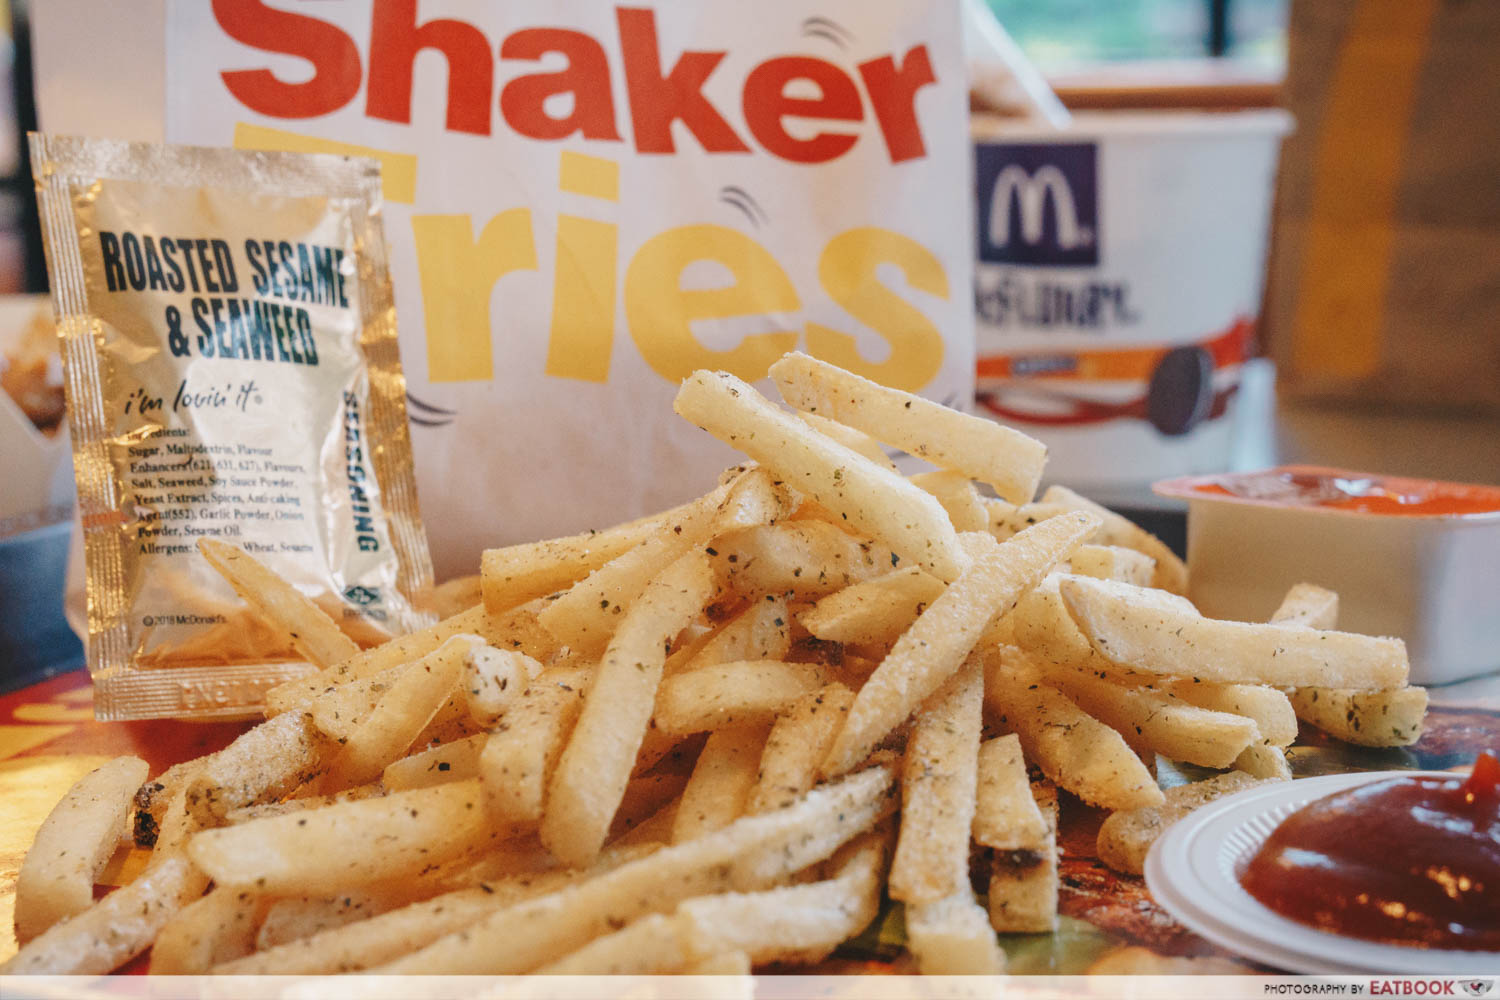 McDonald's - Roasted Sesame & Seaweed Shaker Fries